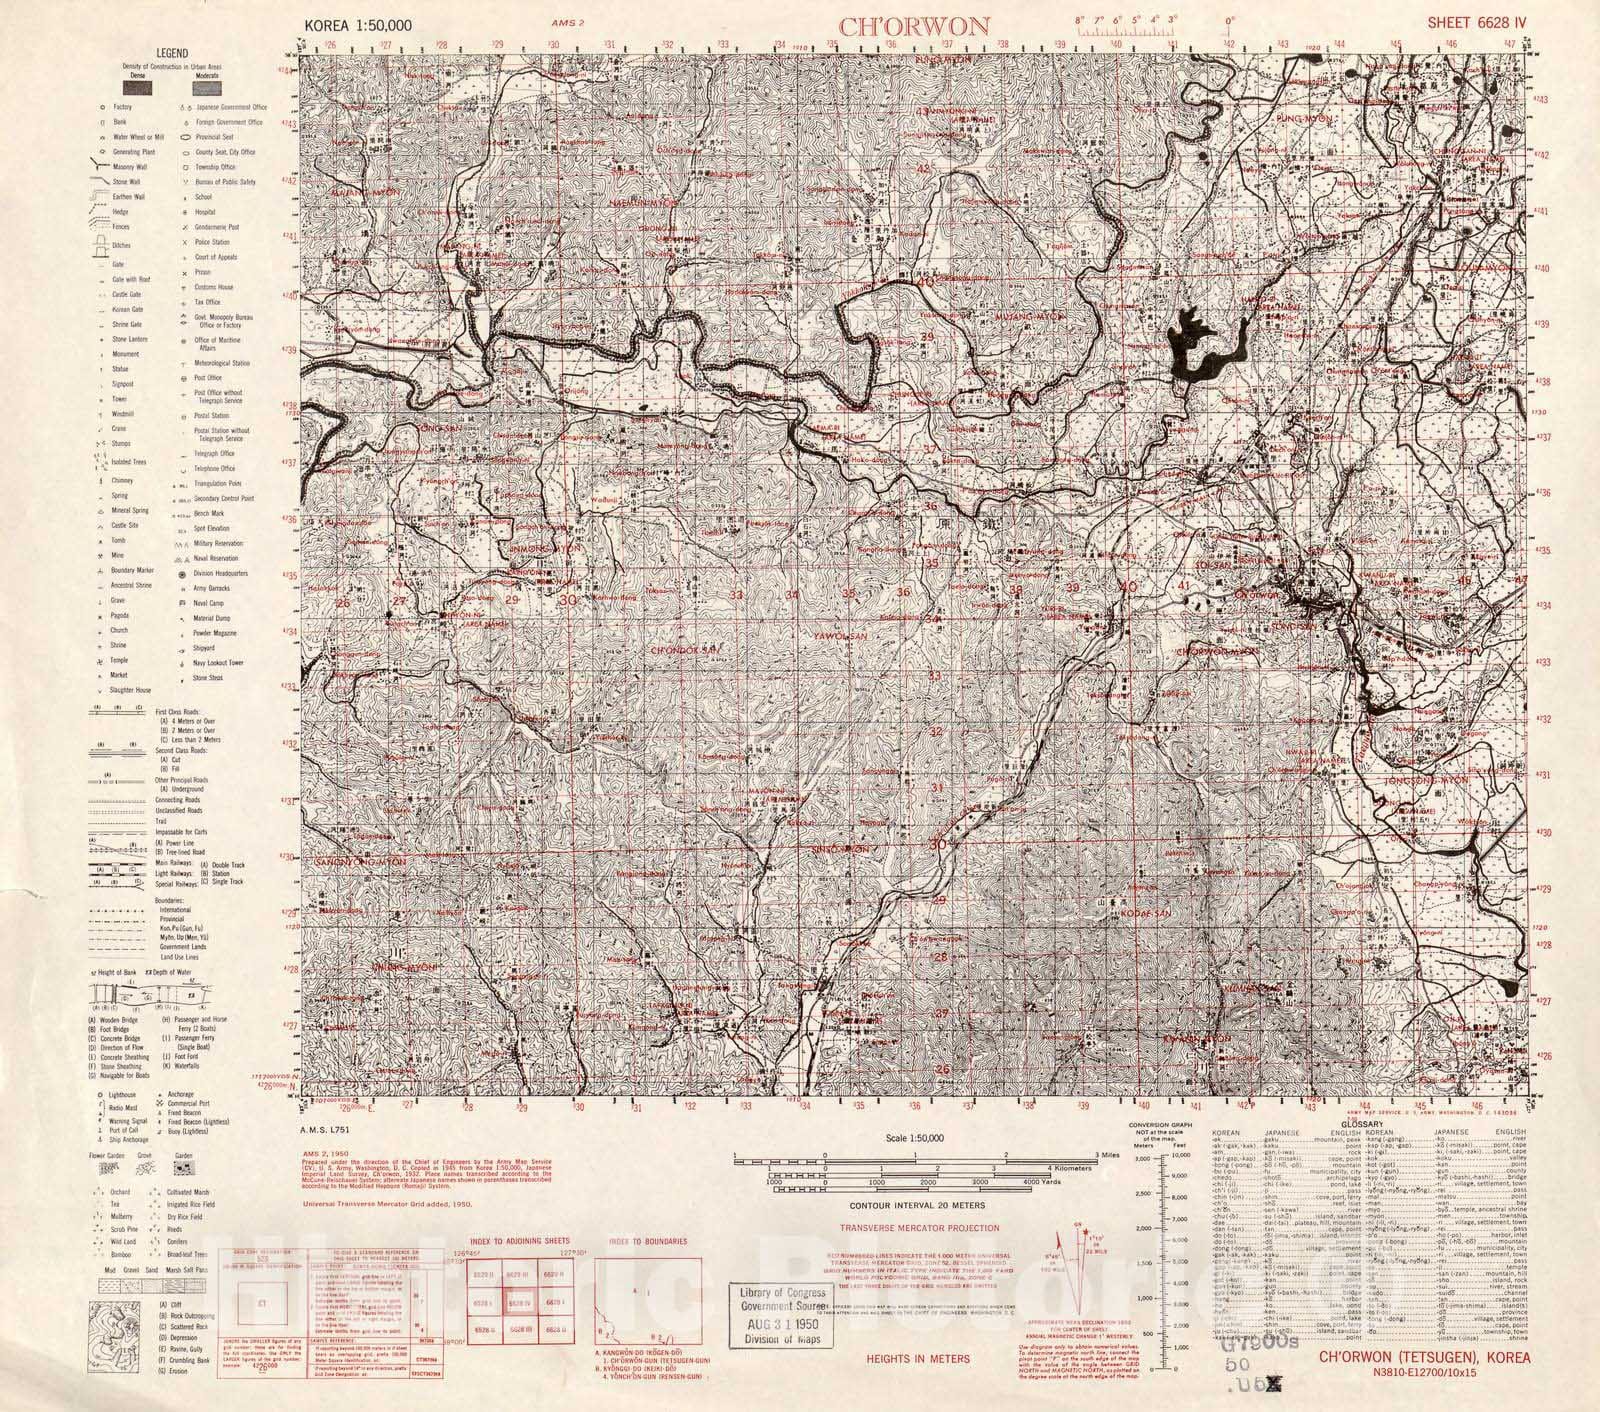 Historic 1945 Map - Korea 1:50,000 - Ch'orwon, 1950 - Series L751